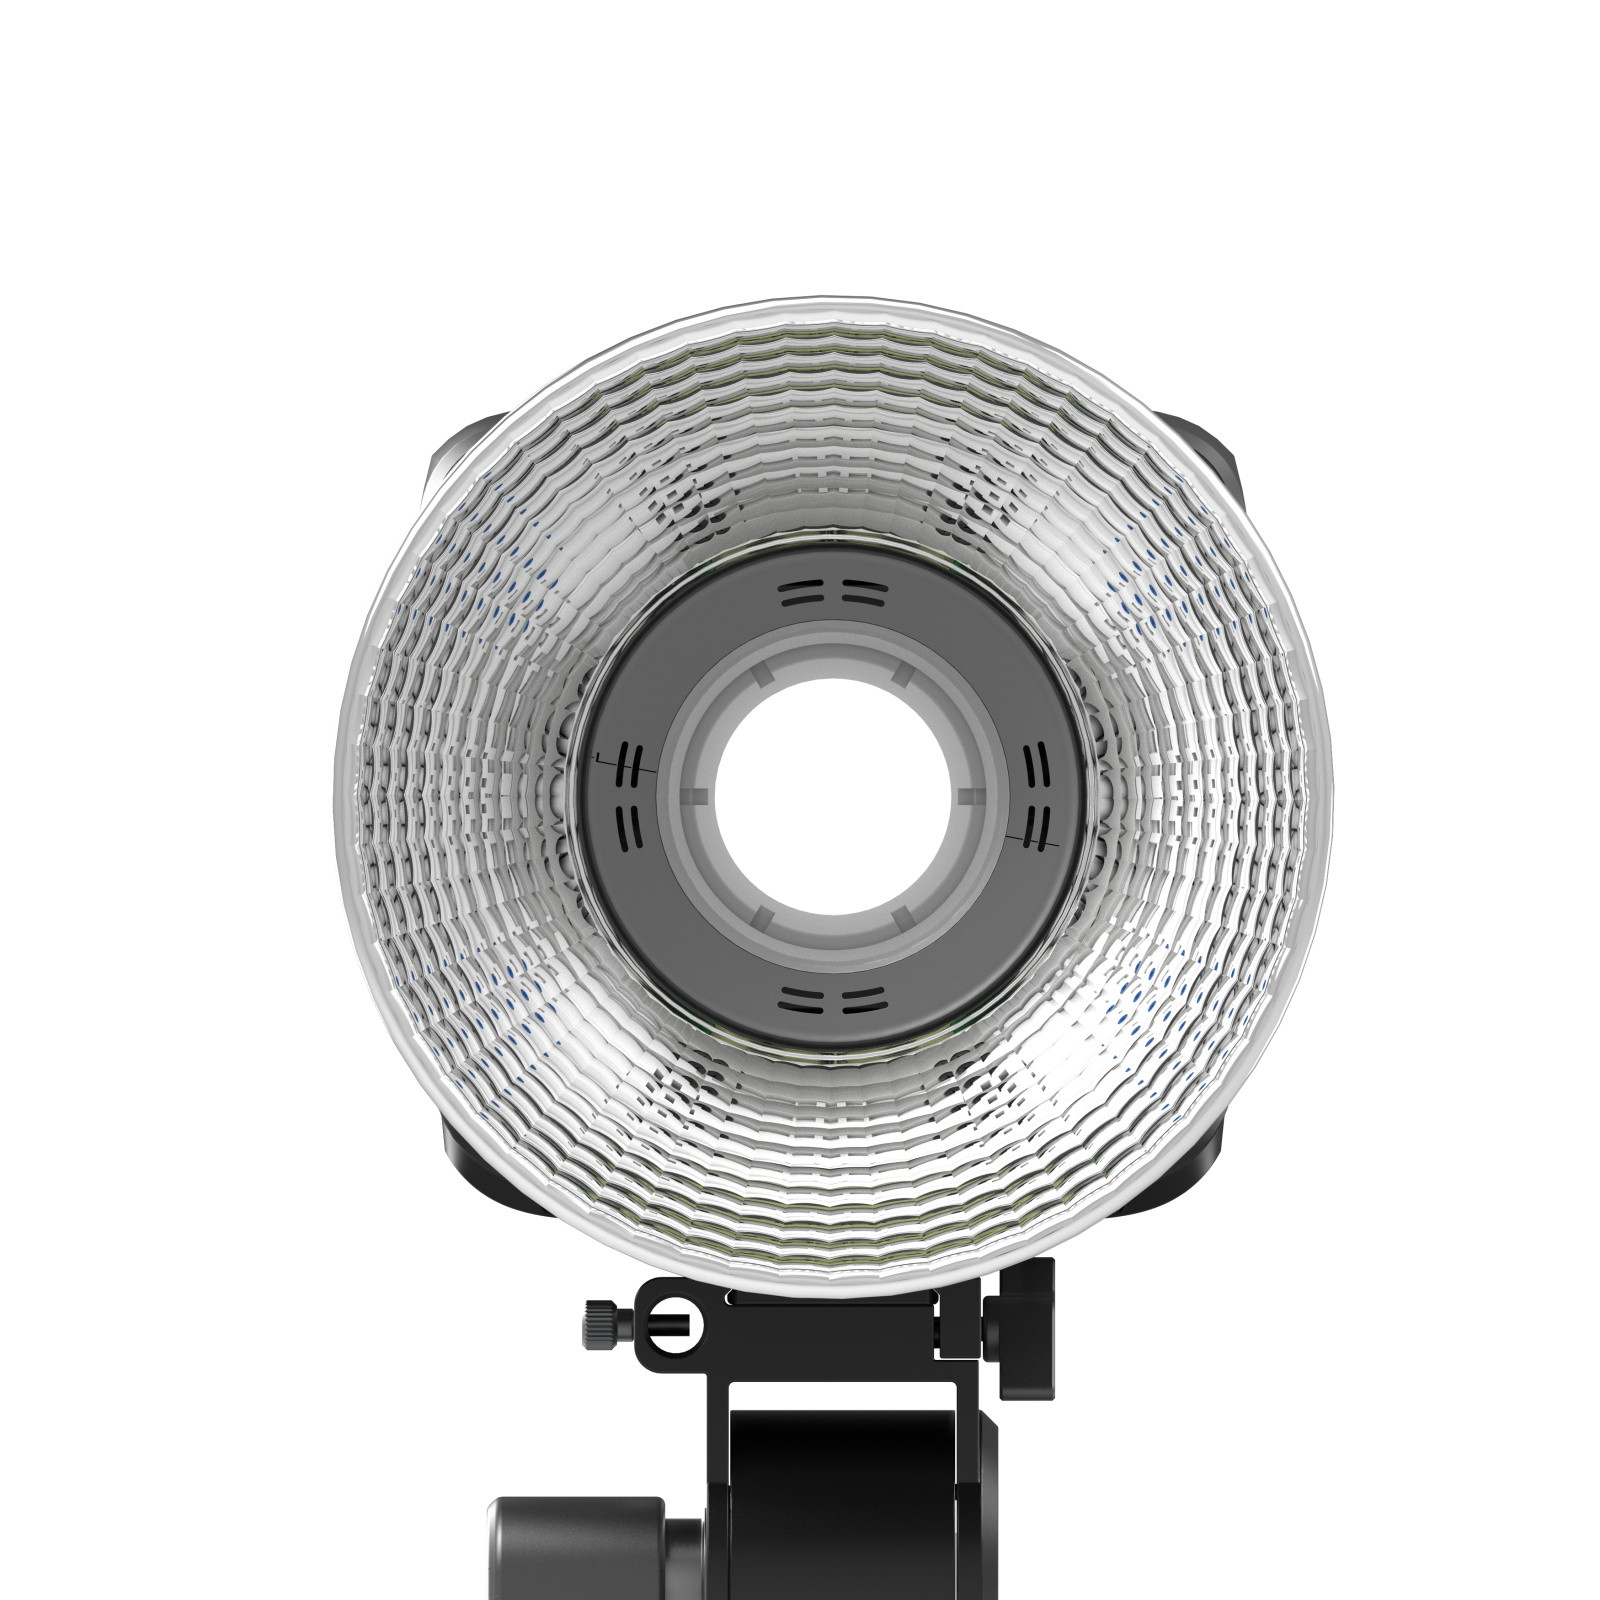 SmallRig RC350D COB LED Video Light (AU) 3963